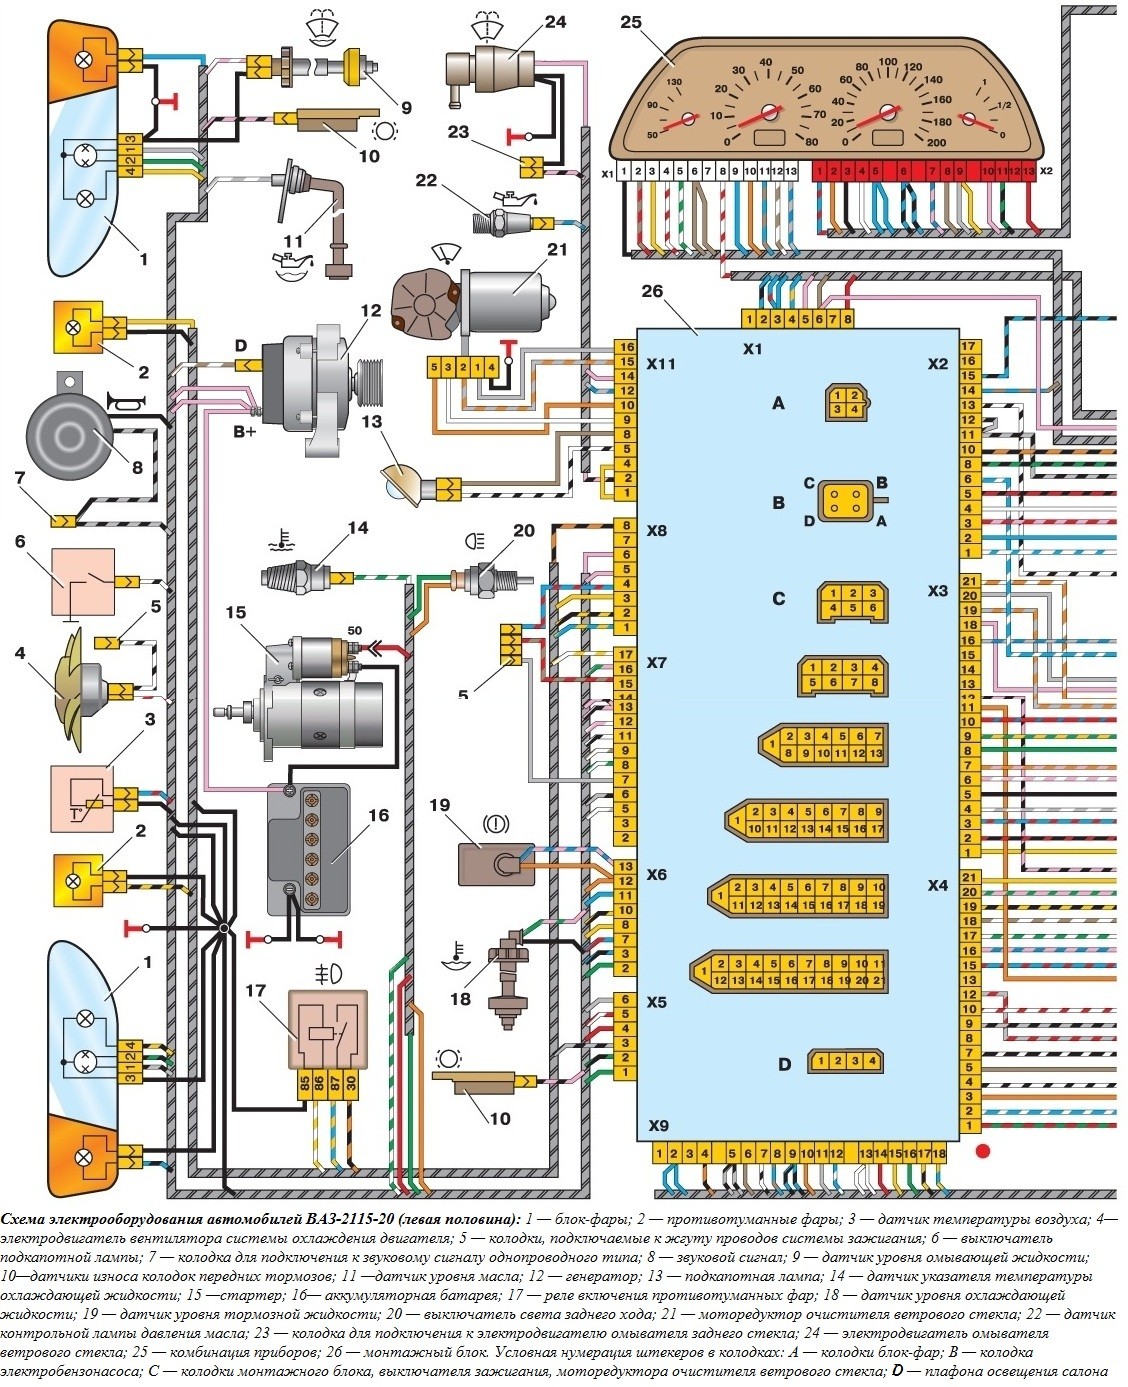 Схема электрооборудования автомобилей ВАЗ-2115-20 (левая половина)